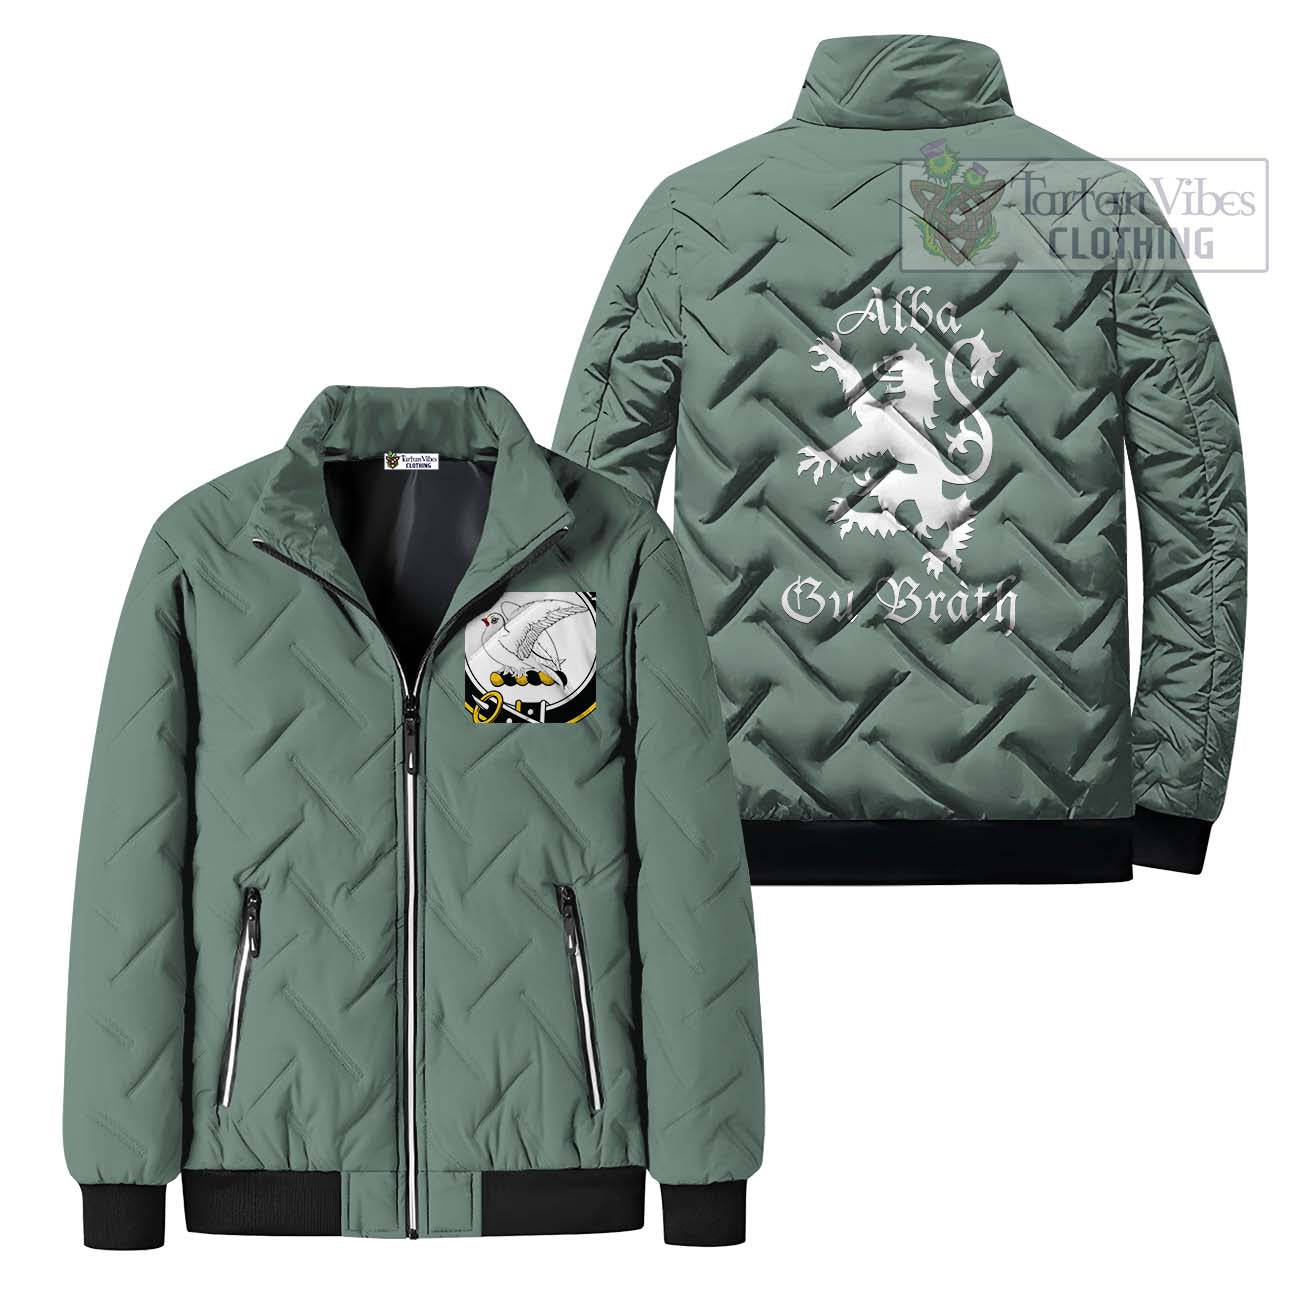 Tartan Vibes Clothing Norvel Family Crest Padded Cotton Jacket Lion Rampant Alba Gu Brath Style